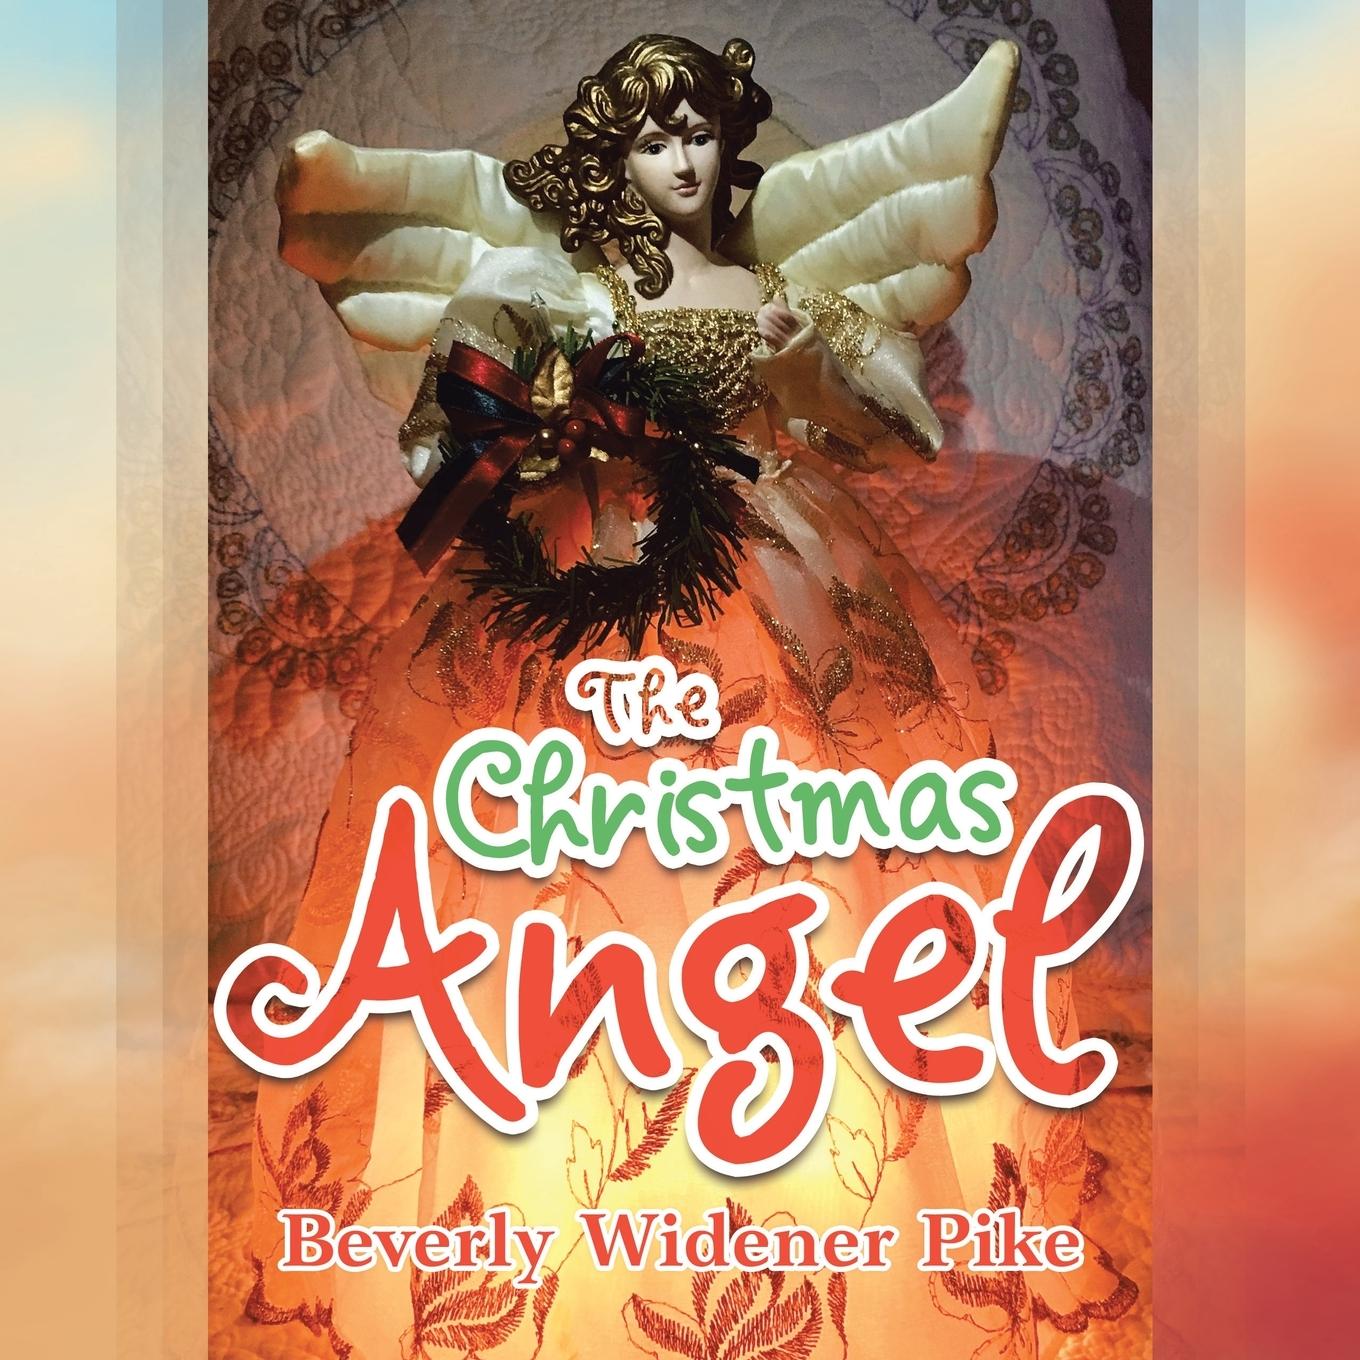 Carte Christmas Angel Pike Beverly Widener Pike